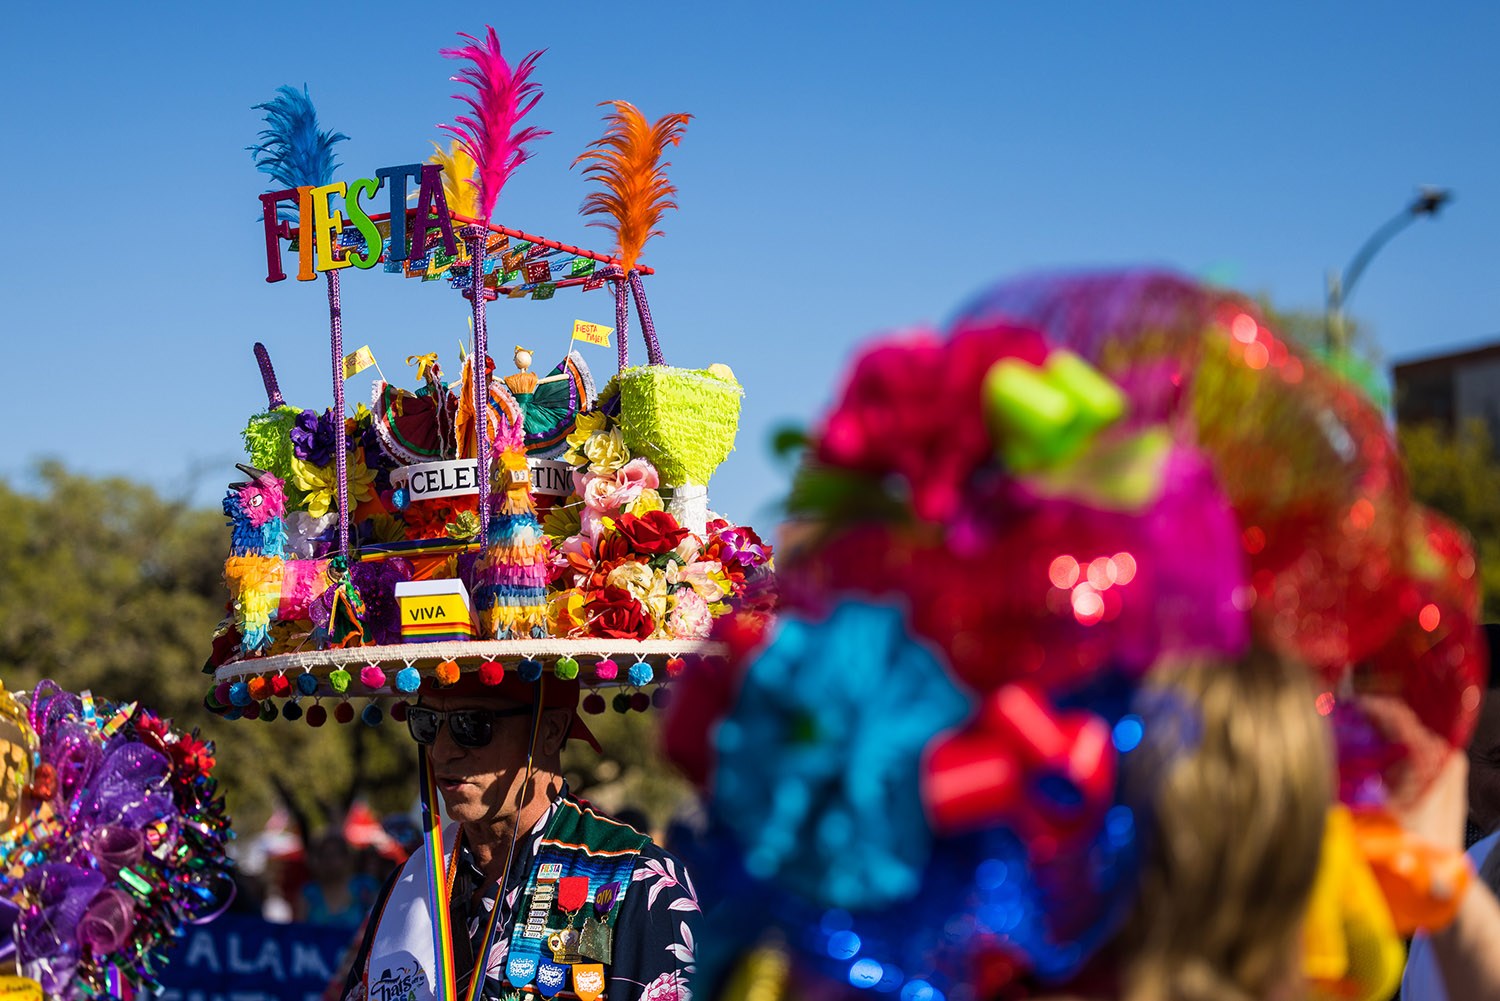 Tye Wychert wears his colorful fun Fiesta hat during Fiesta Fiesta at Hemisfair, San Antonio, TX, on Thursday, March 31, 2022. Photo by Chris Stokes | Heron contributor